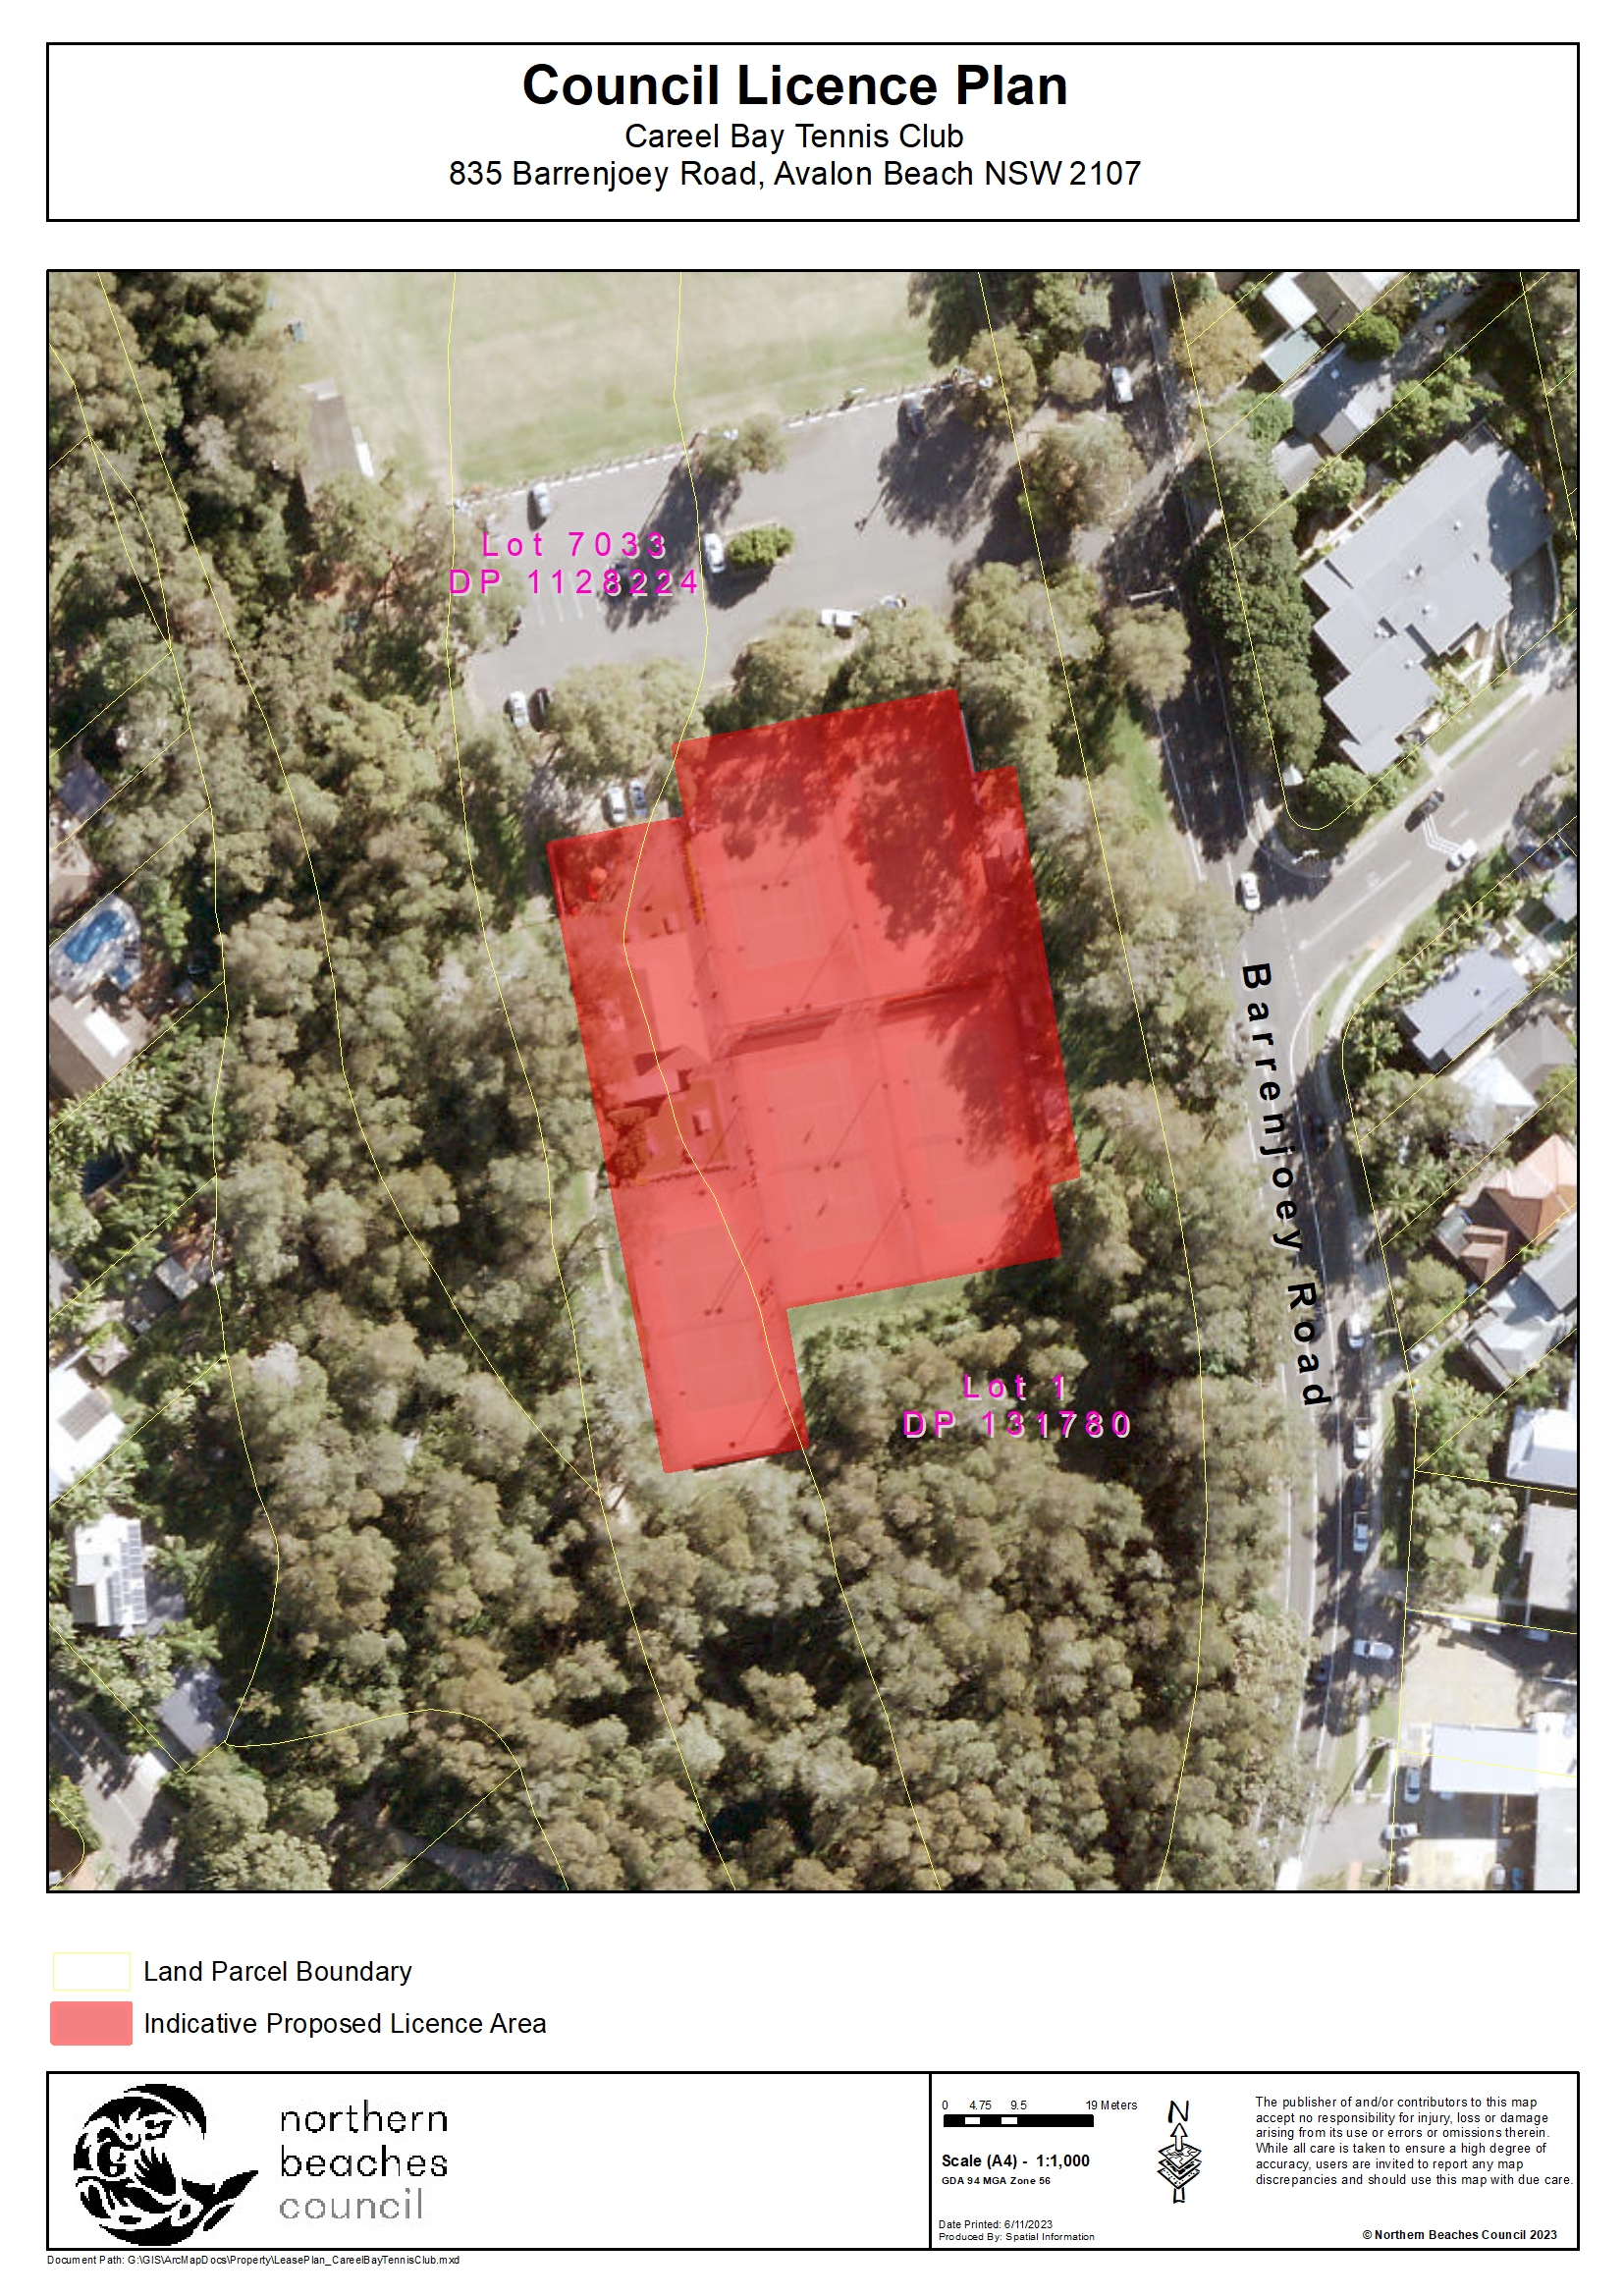 Careel Bay Tennis Club Lease Plan